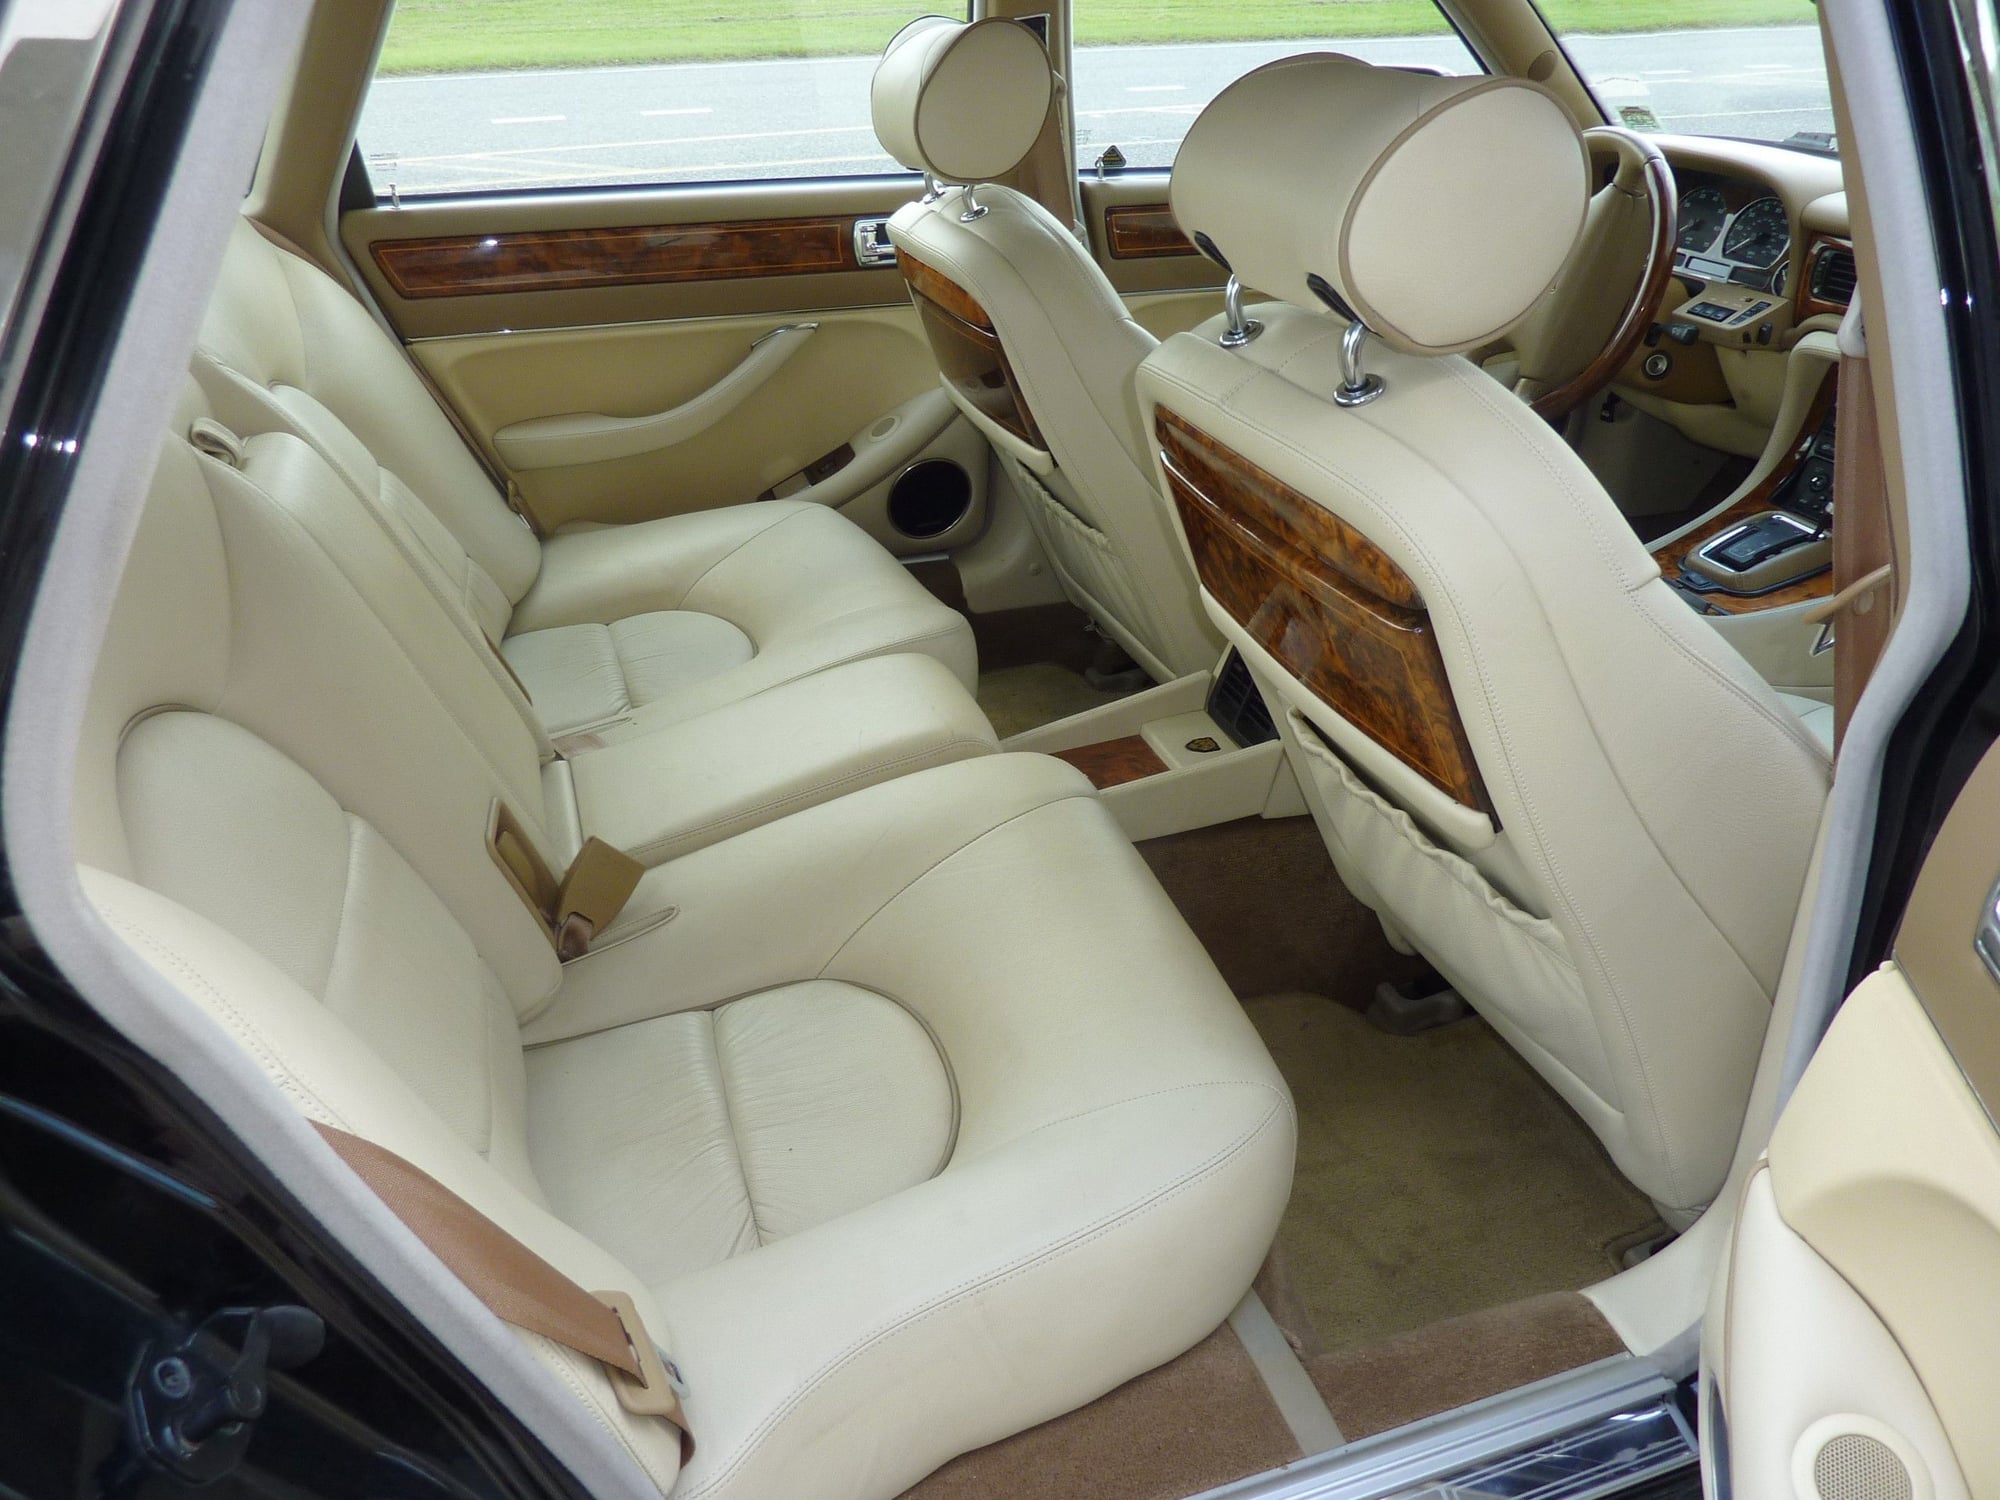 1995 Jaguar XJ12 - Black XJ12 with Cream leather interior - Used - VIN SAJMX1348SC720716 - 62,000 Miles - 12 cyl - 2WD - Automatic - Sedan - Black - New Orleans, LA 70124, United States